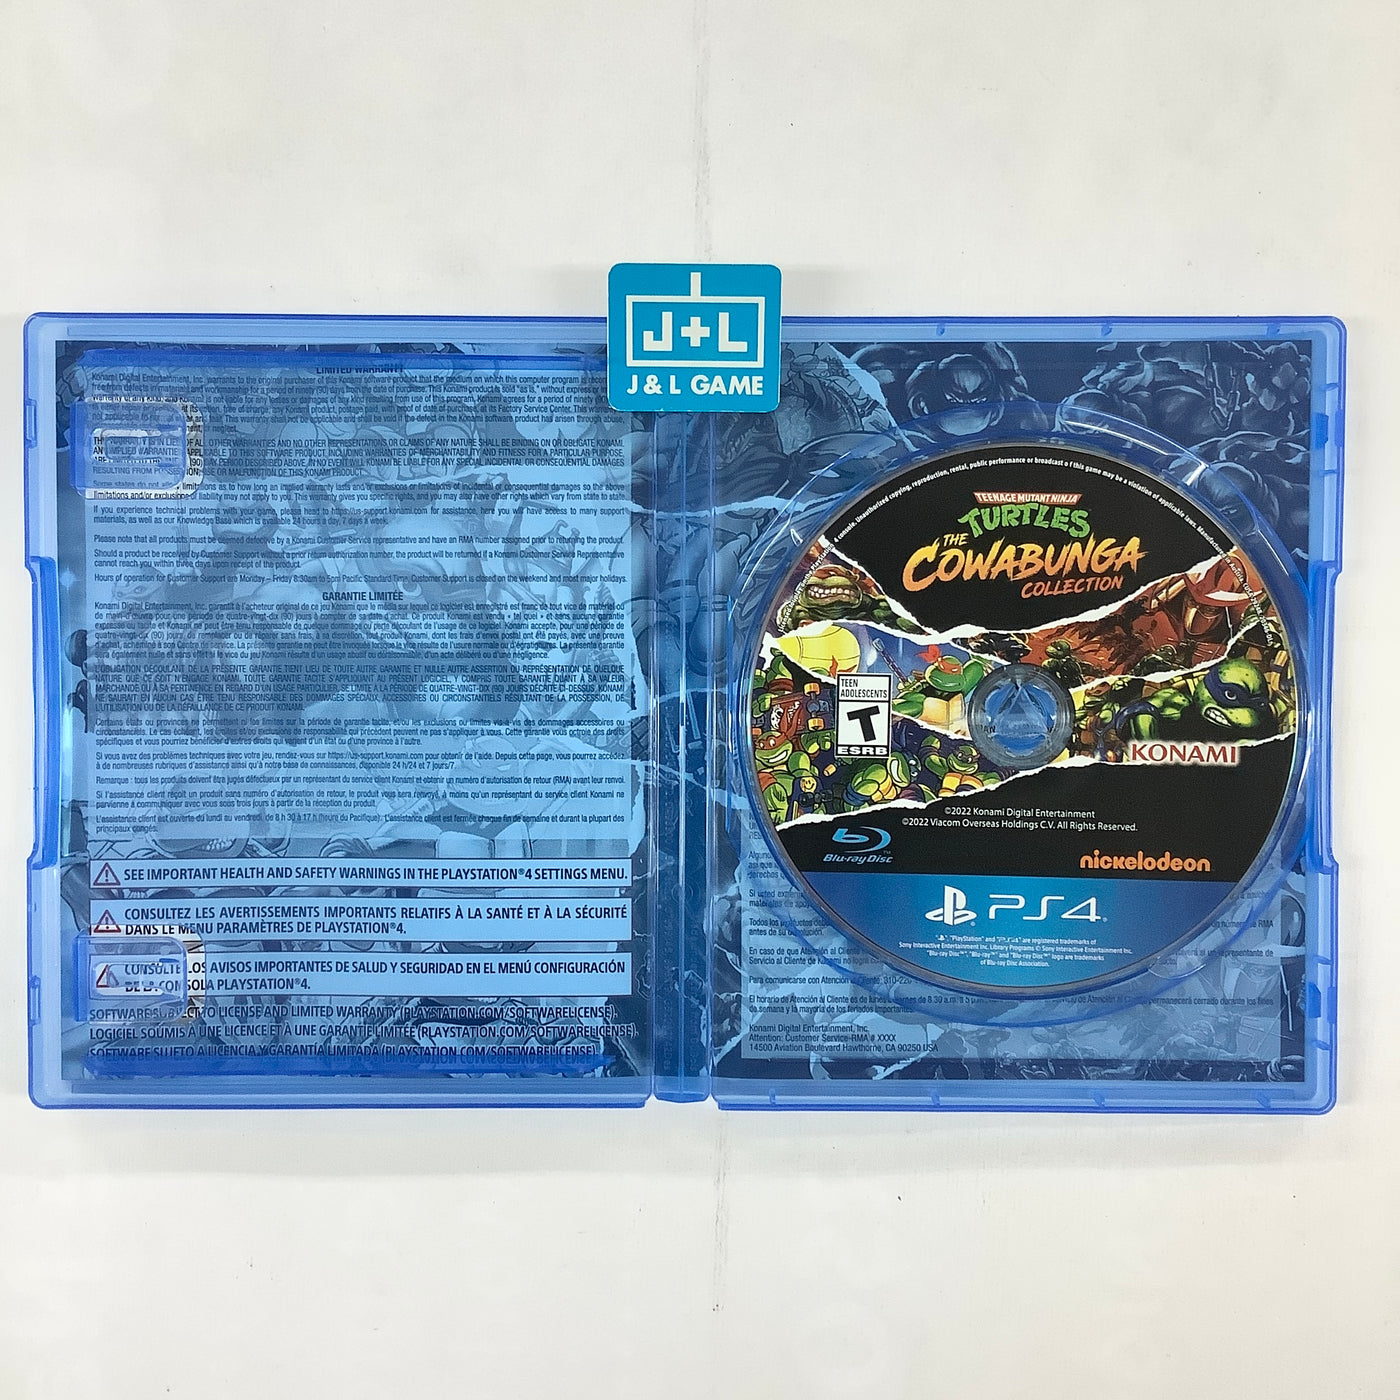 Teenage Mutant The | Collection Turtles: - (PS4) Ninja J&L PlaySta Game Cowabunga